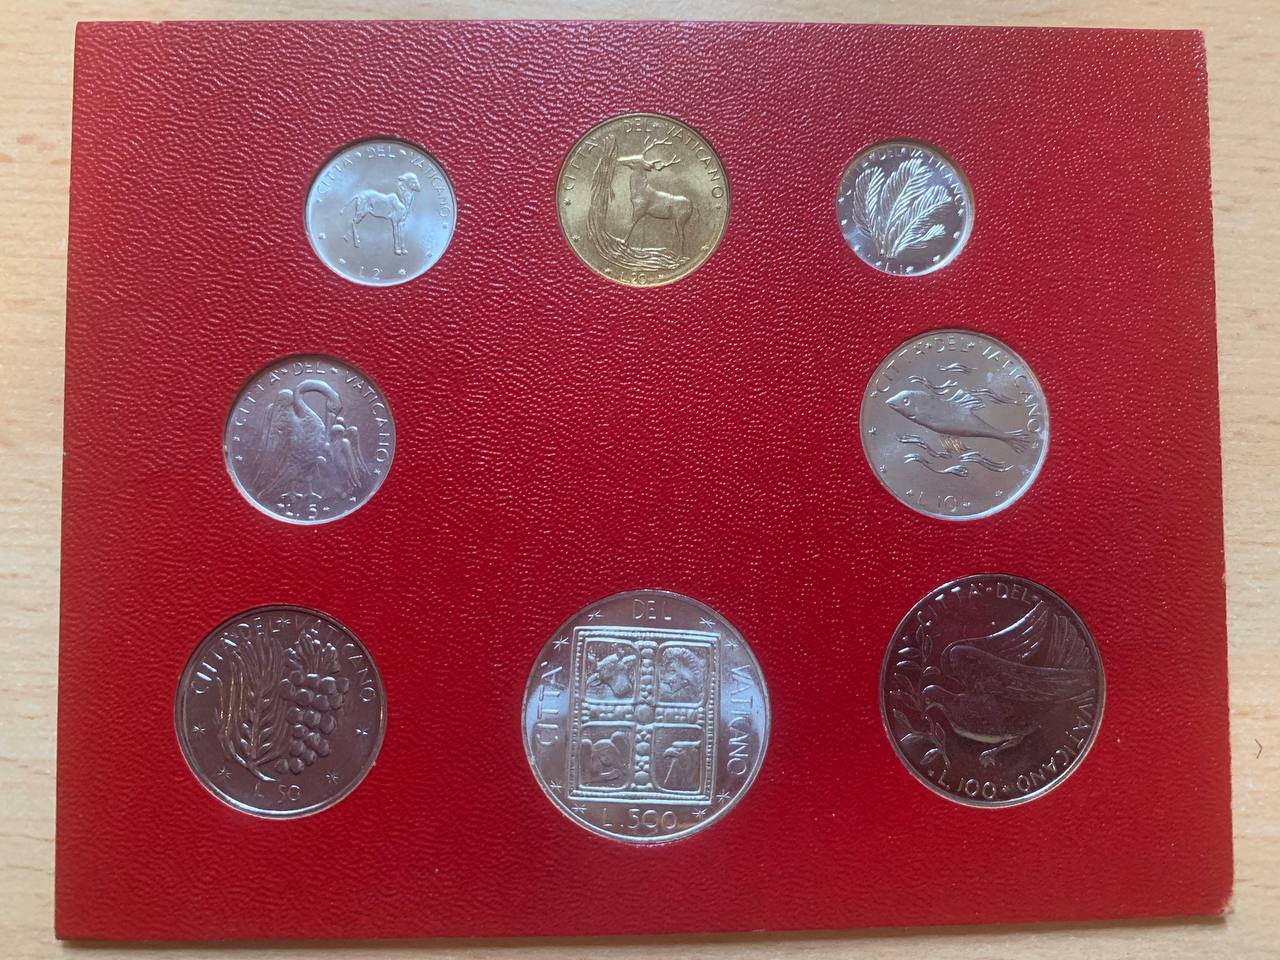  Vatikan 1977 Coin set BU (8 coins)   